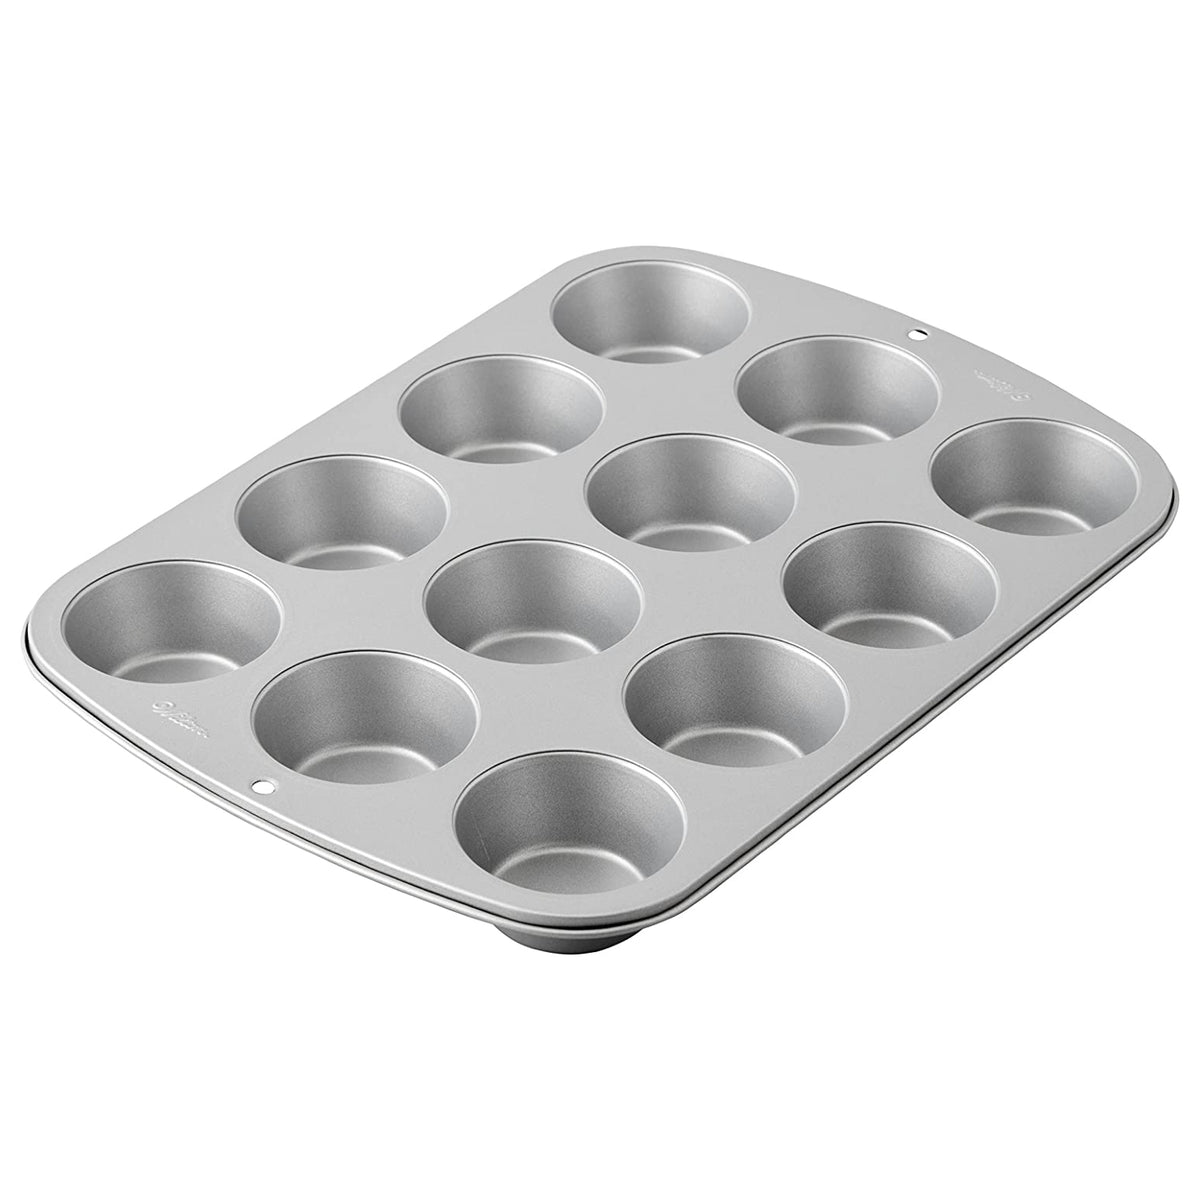  Wilton 2105-955 6-Cup Jumbo Muffin Pan: Home & Kitchen